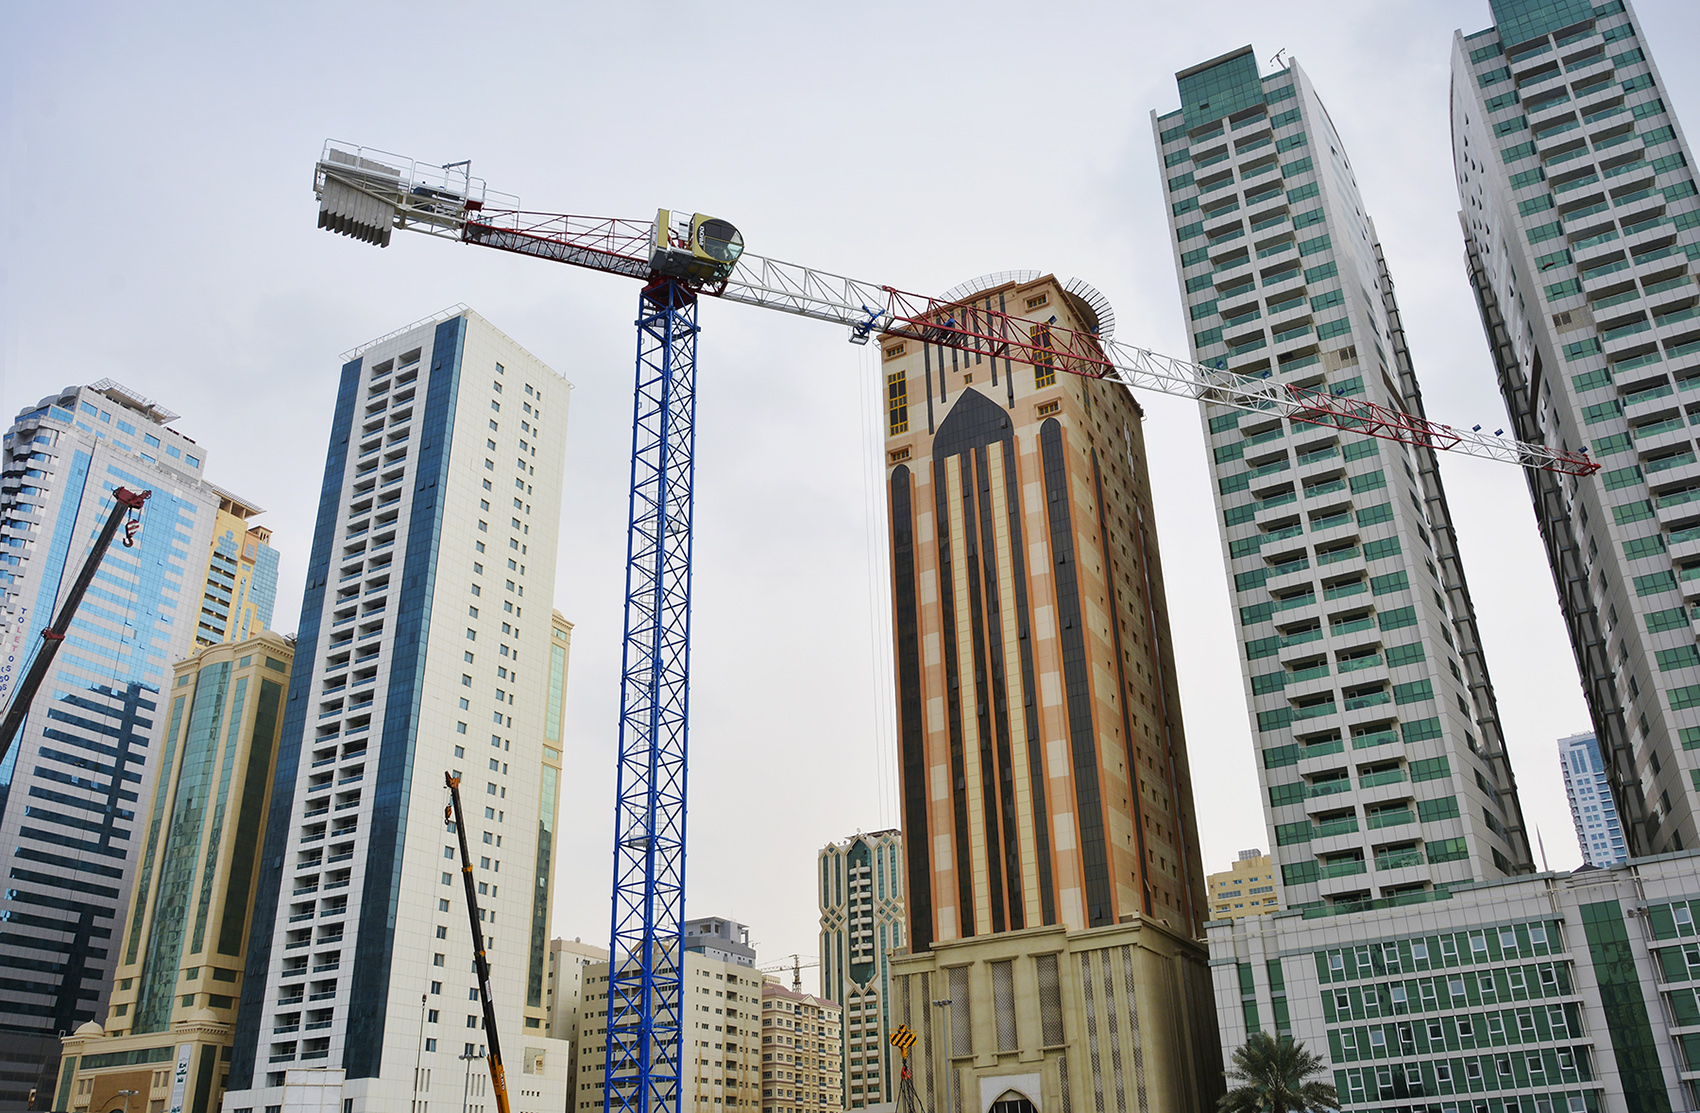 Cranes Today: Raimondi takes the heat in the UAE